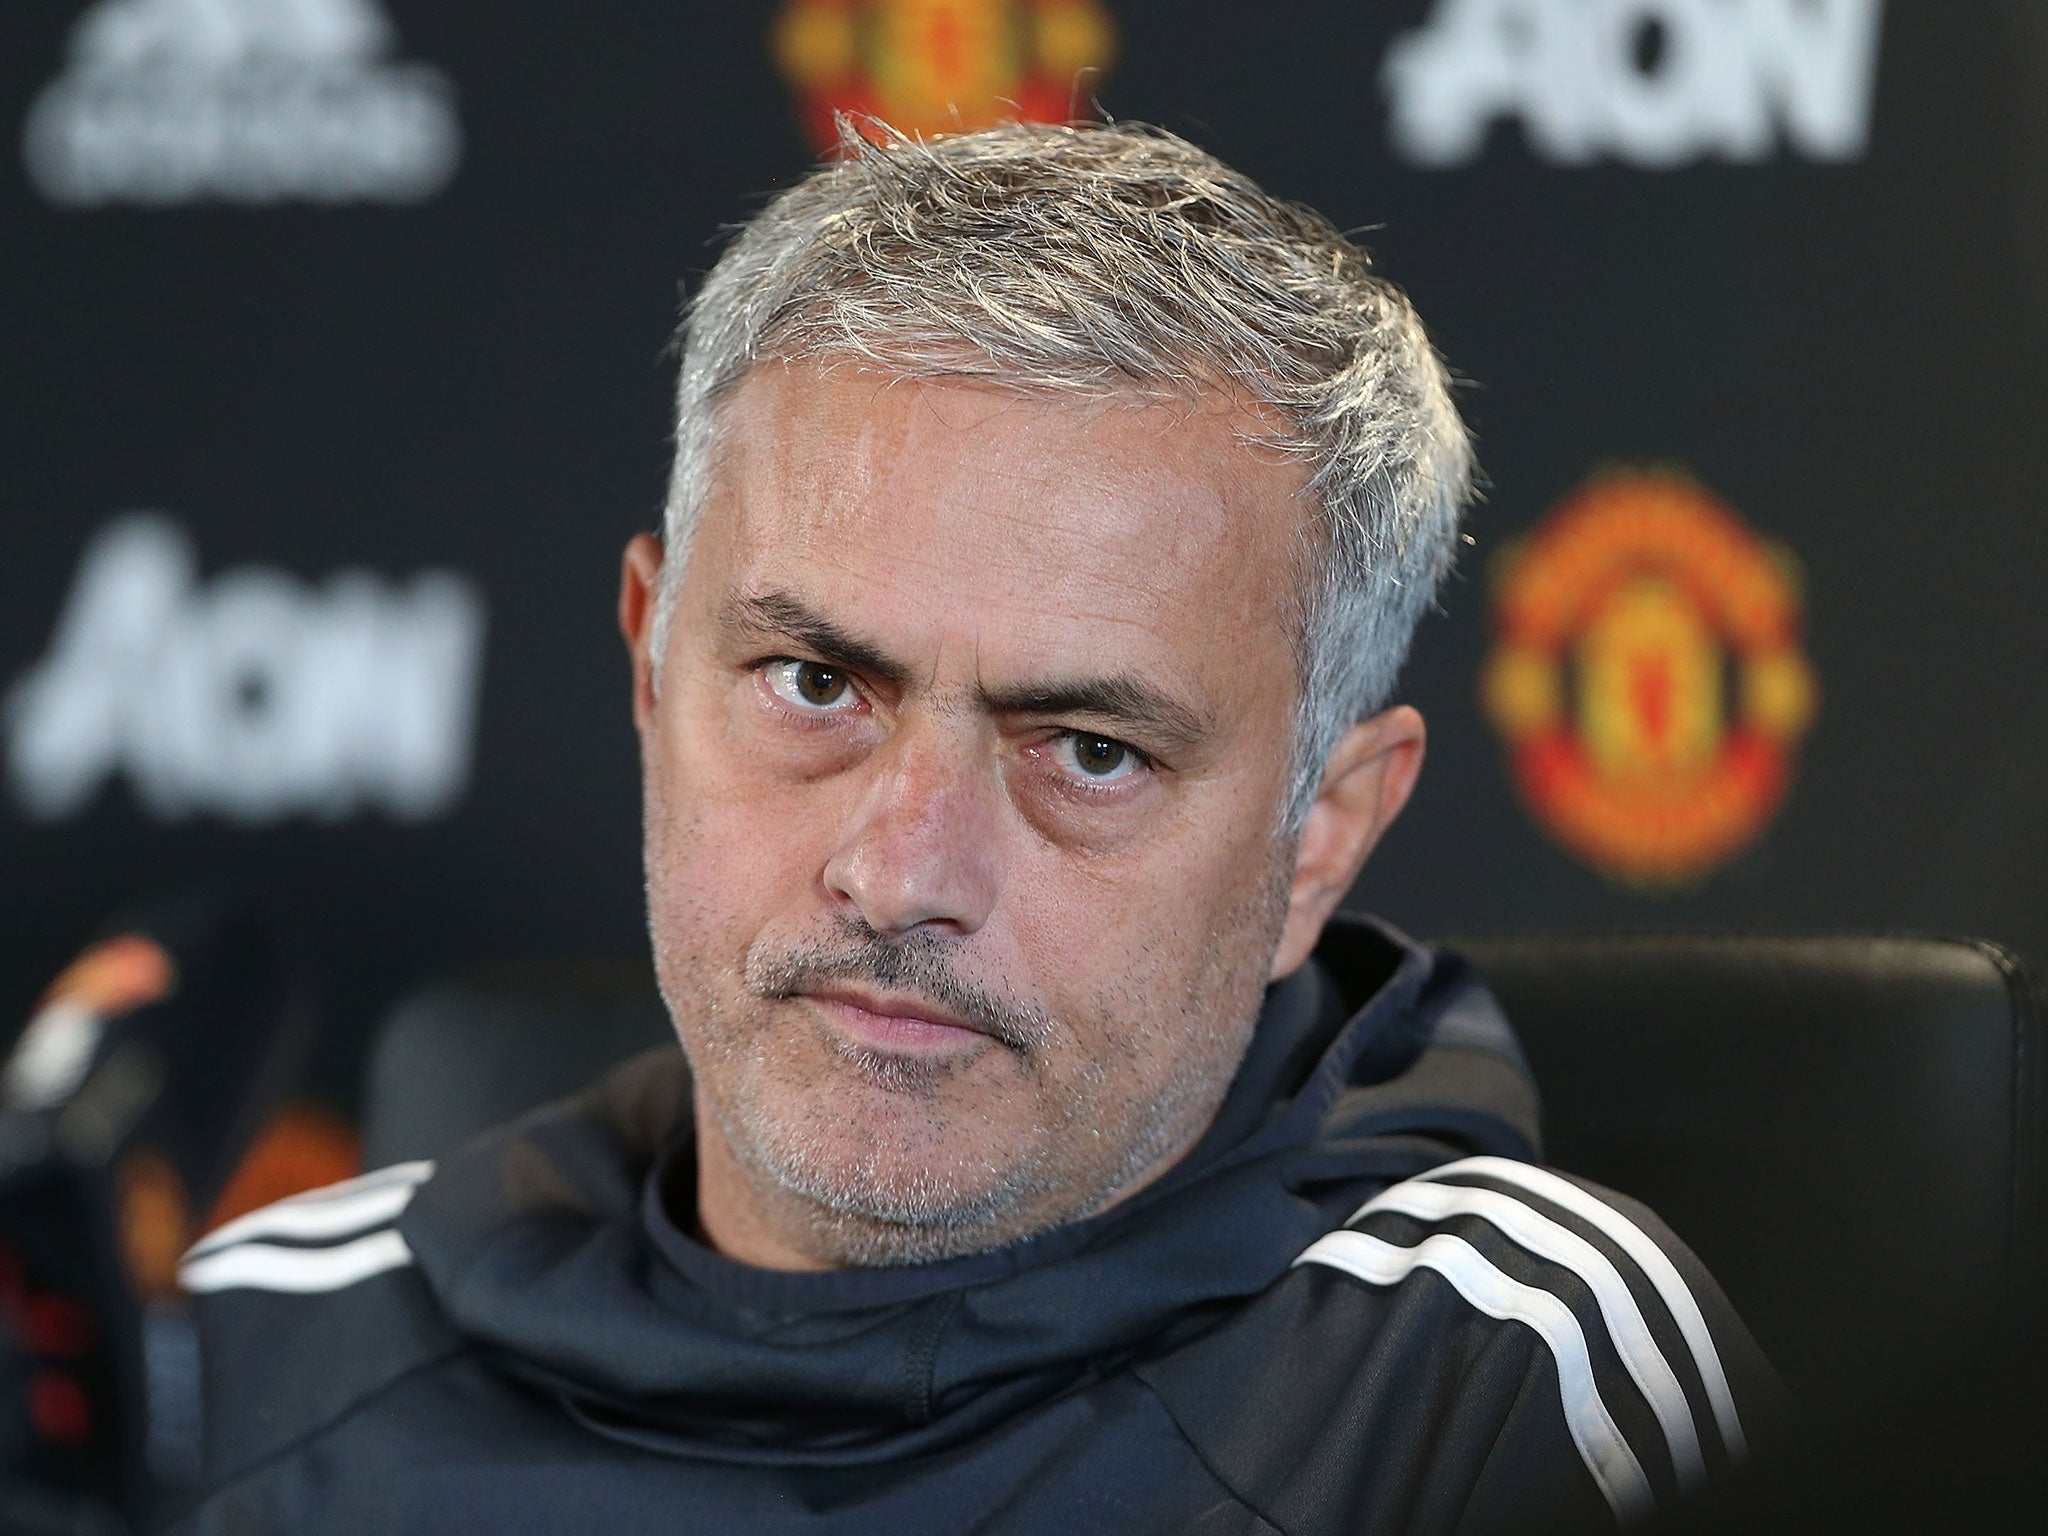 Jose Mourinho has downplayed Saturday's meeting with Liverpool